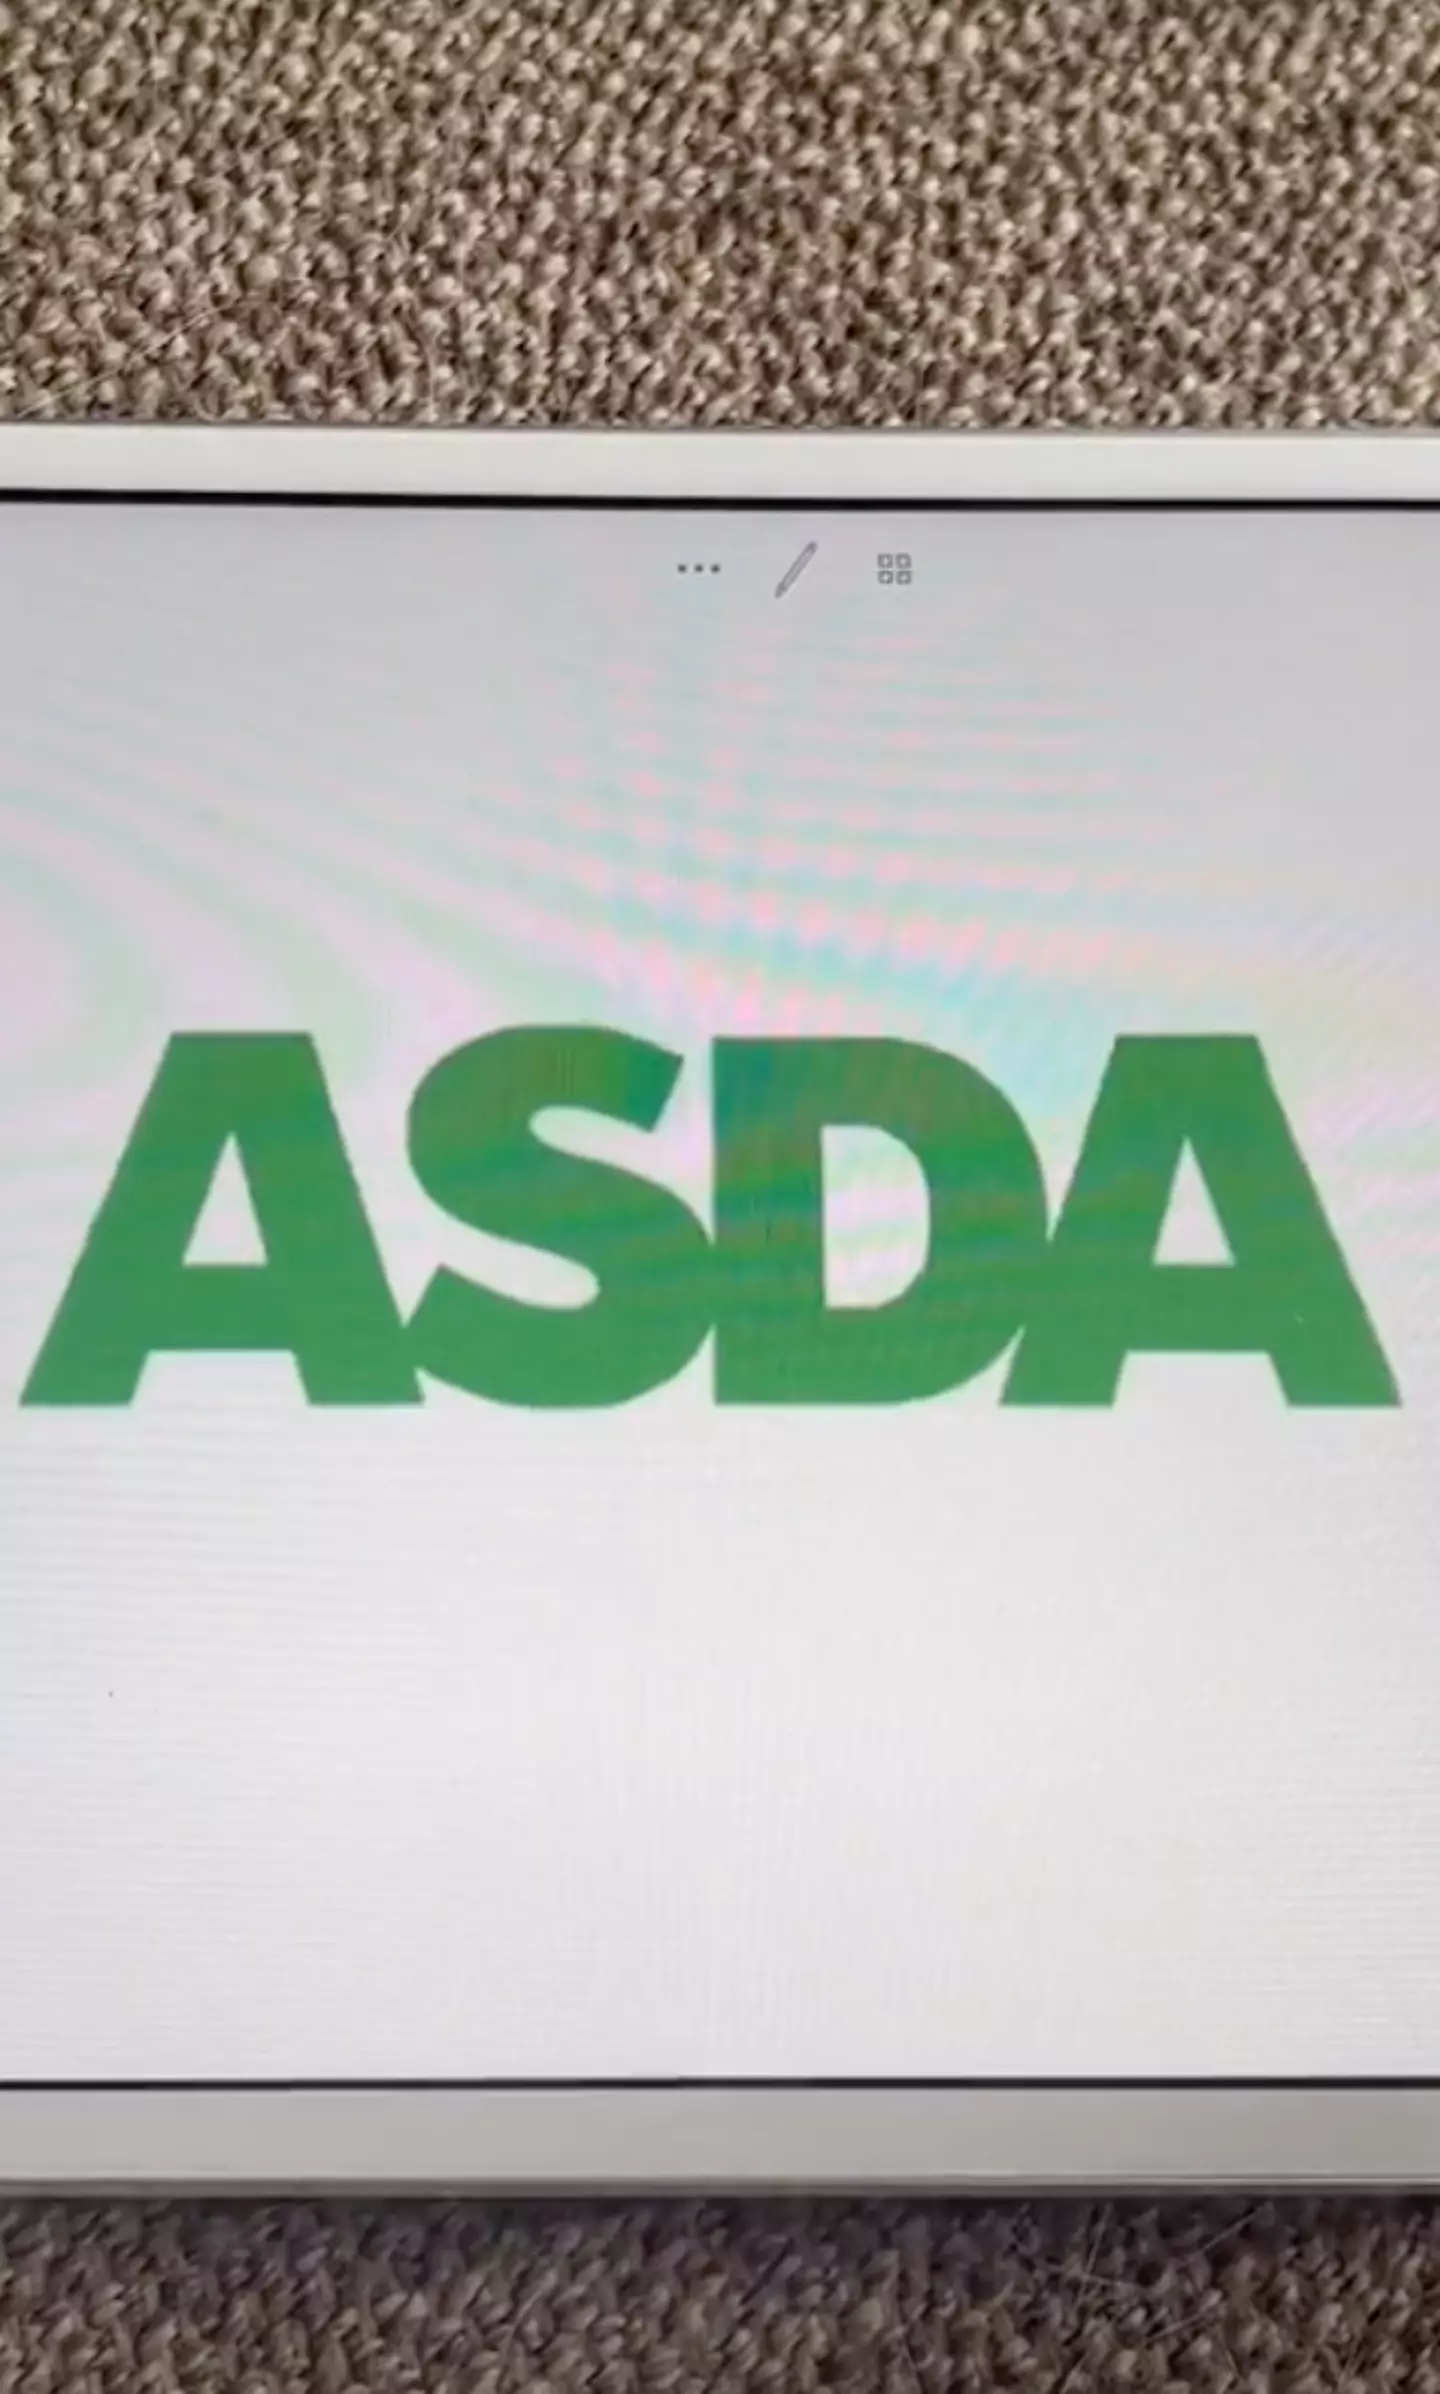 People were quite underwhelmed by Asda's logo transformation. (